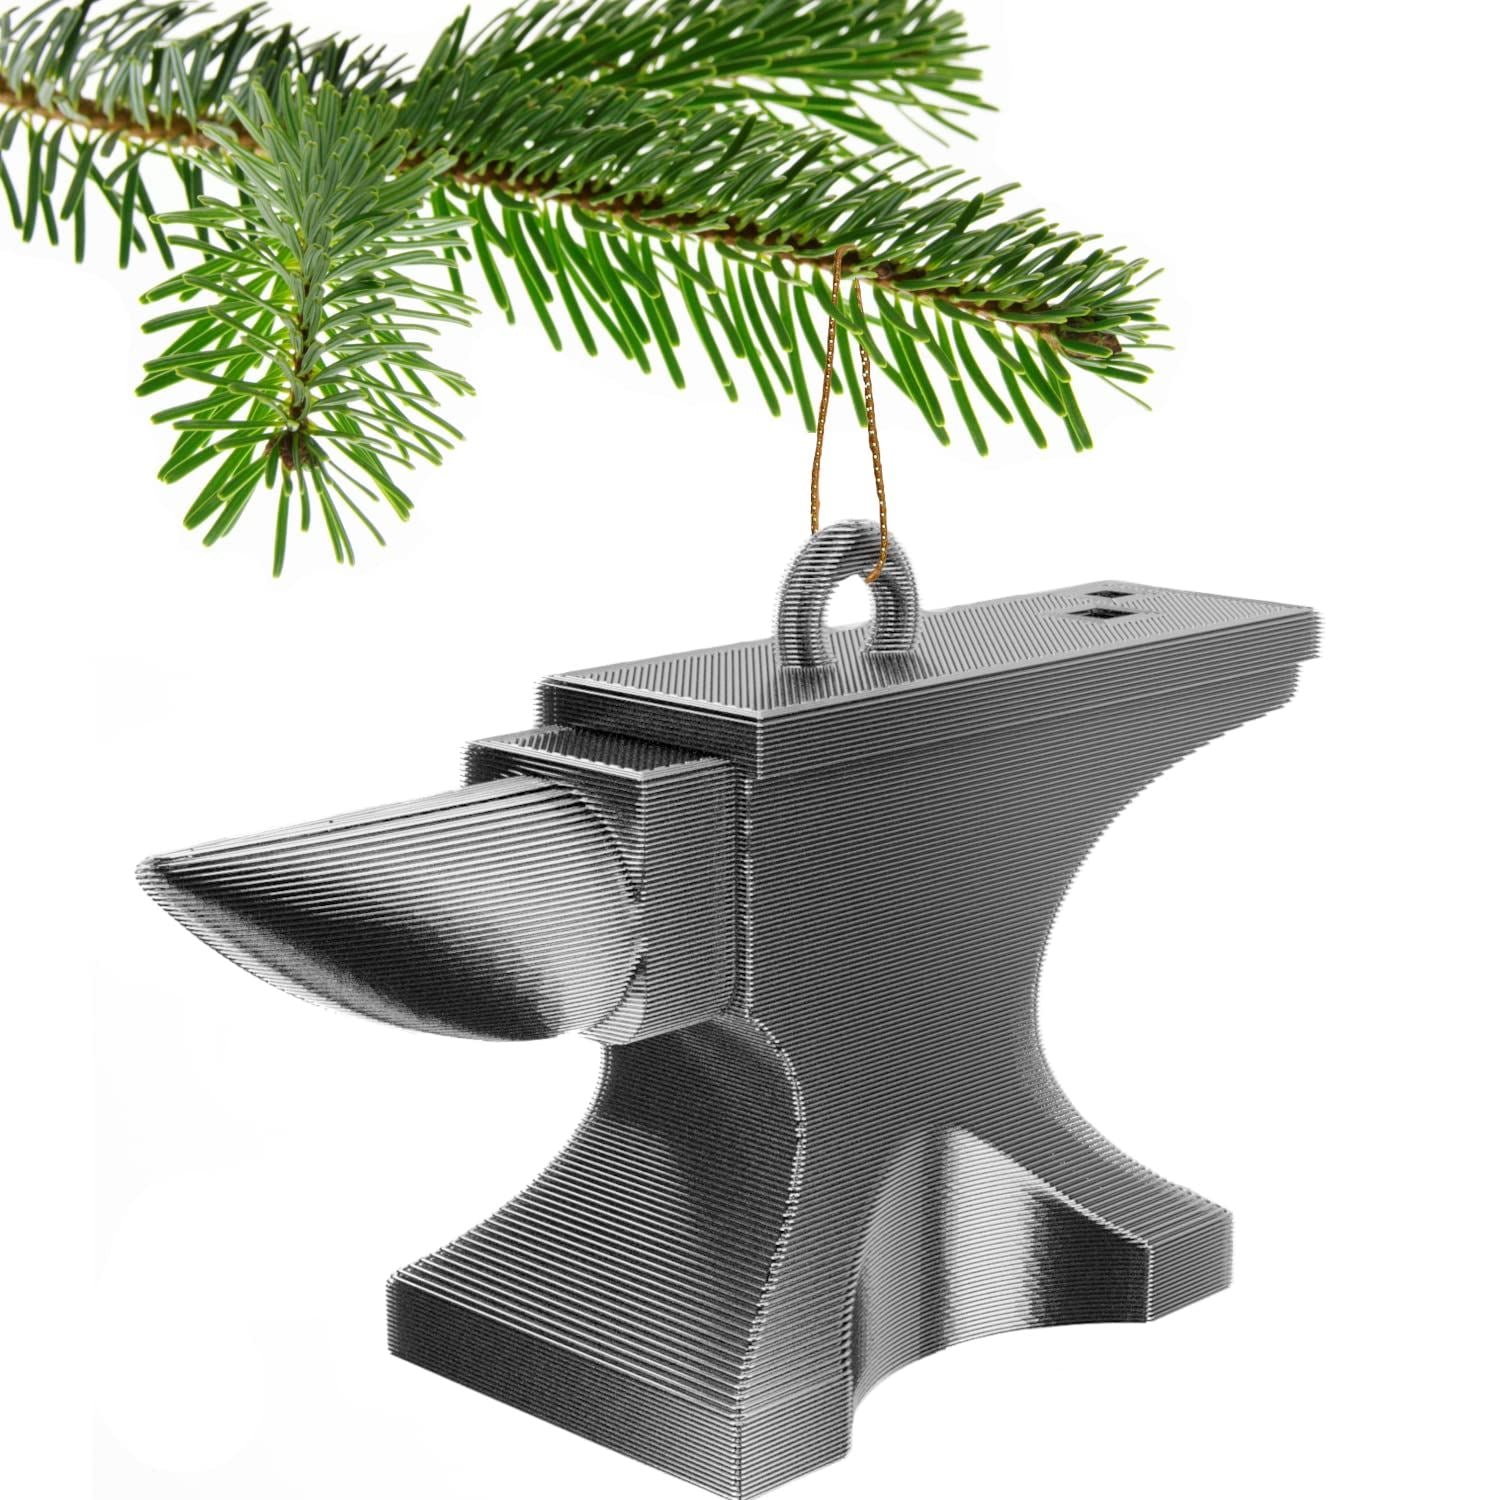 Anvil Blacksmith Christmas Tree Bauble Decoration Ornament For Christmas Xmas Noel